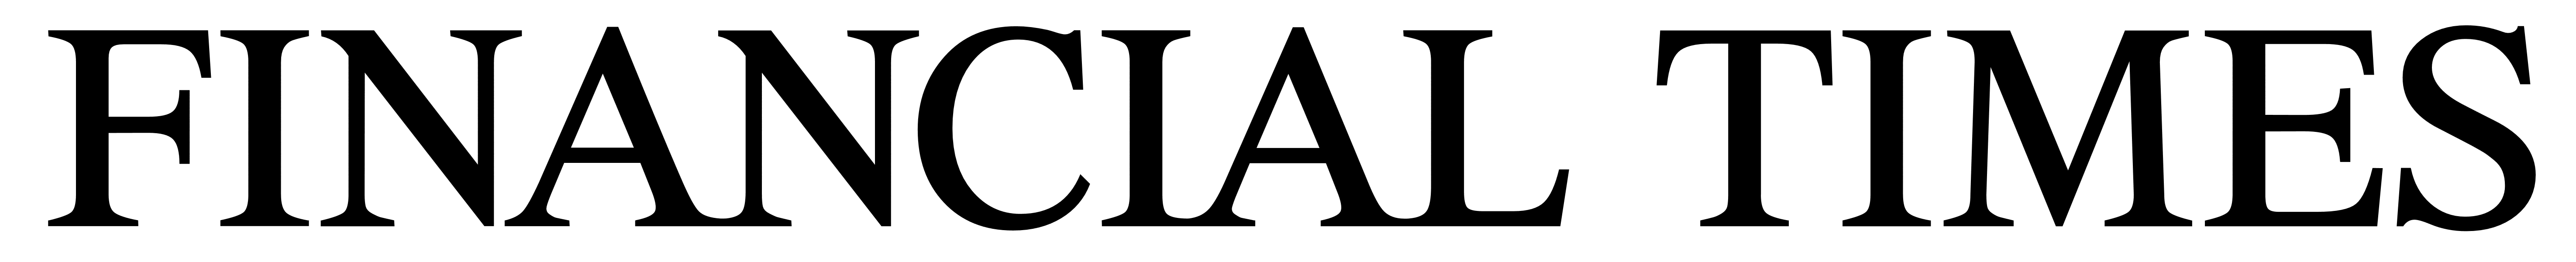 The Financial Times logo, logotype